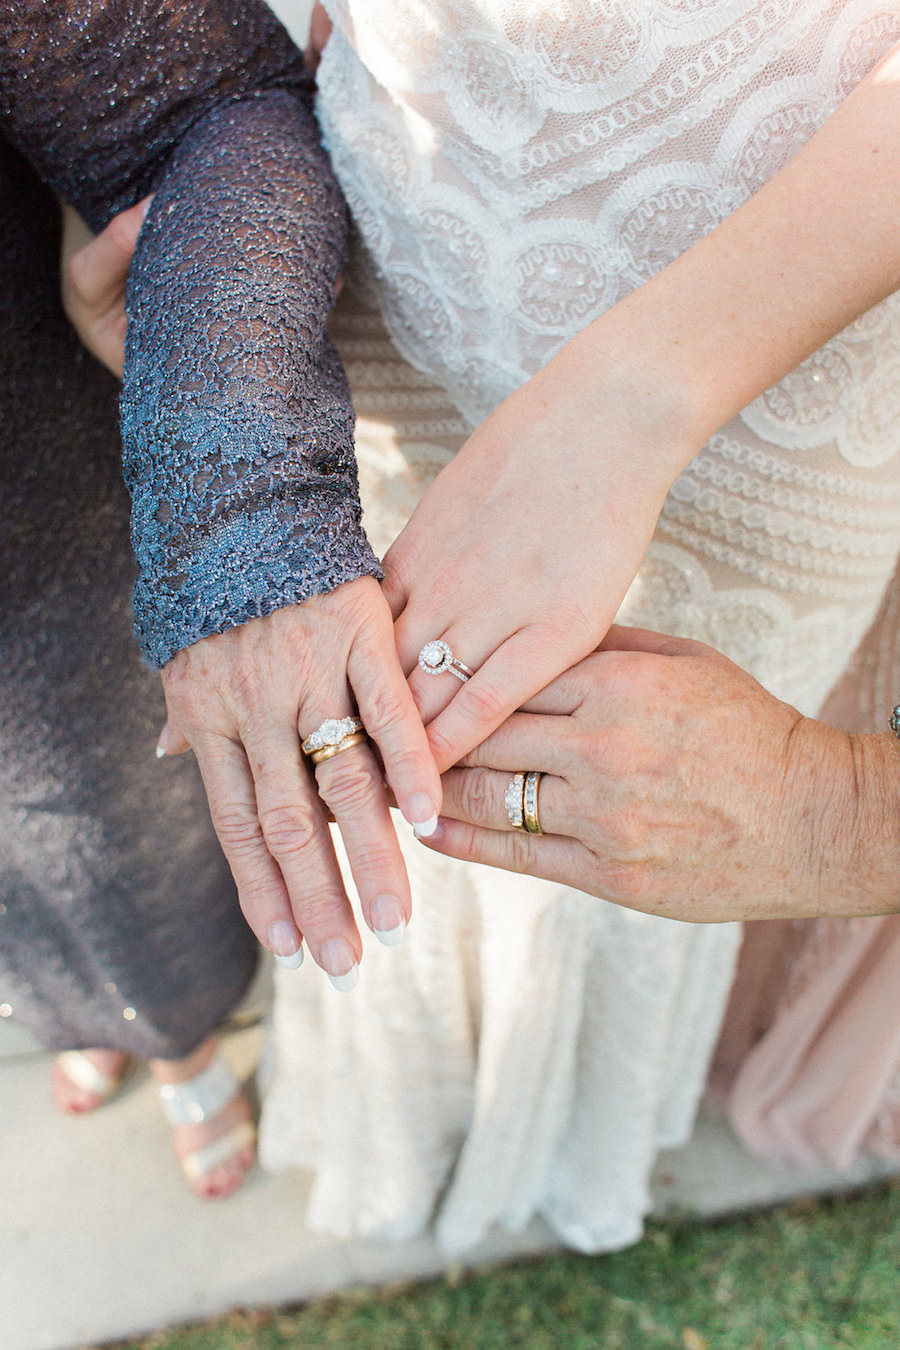 Generations of Women in Family Bridal Wedding Ring Portrait | Wedding Day Photo Ideas